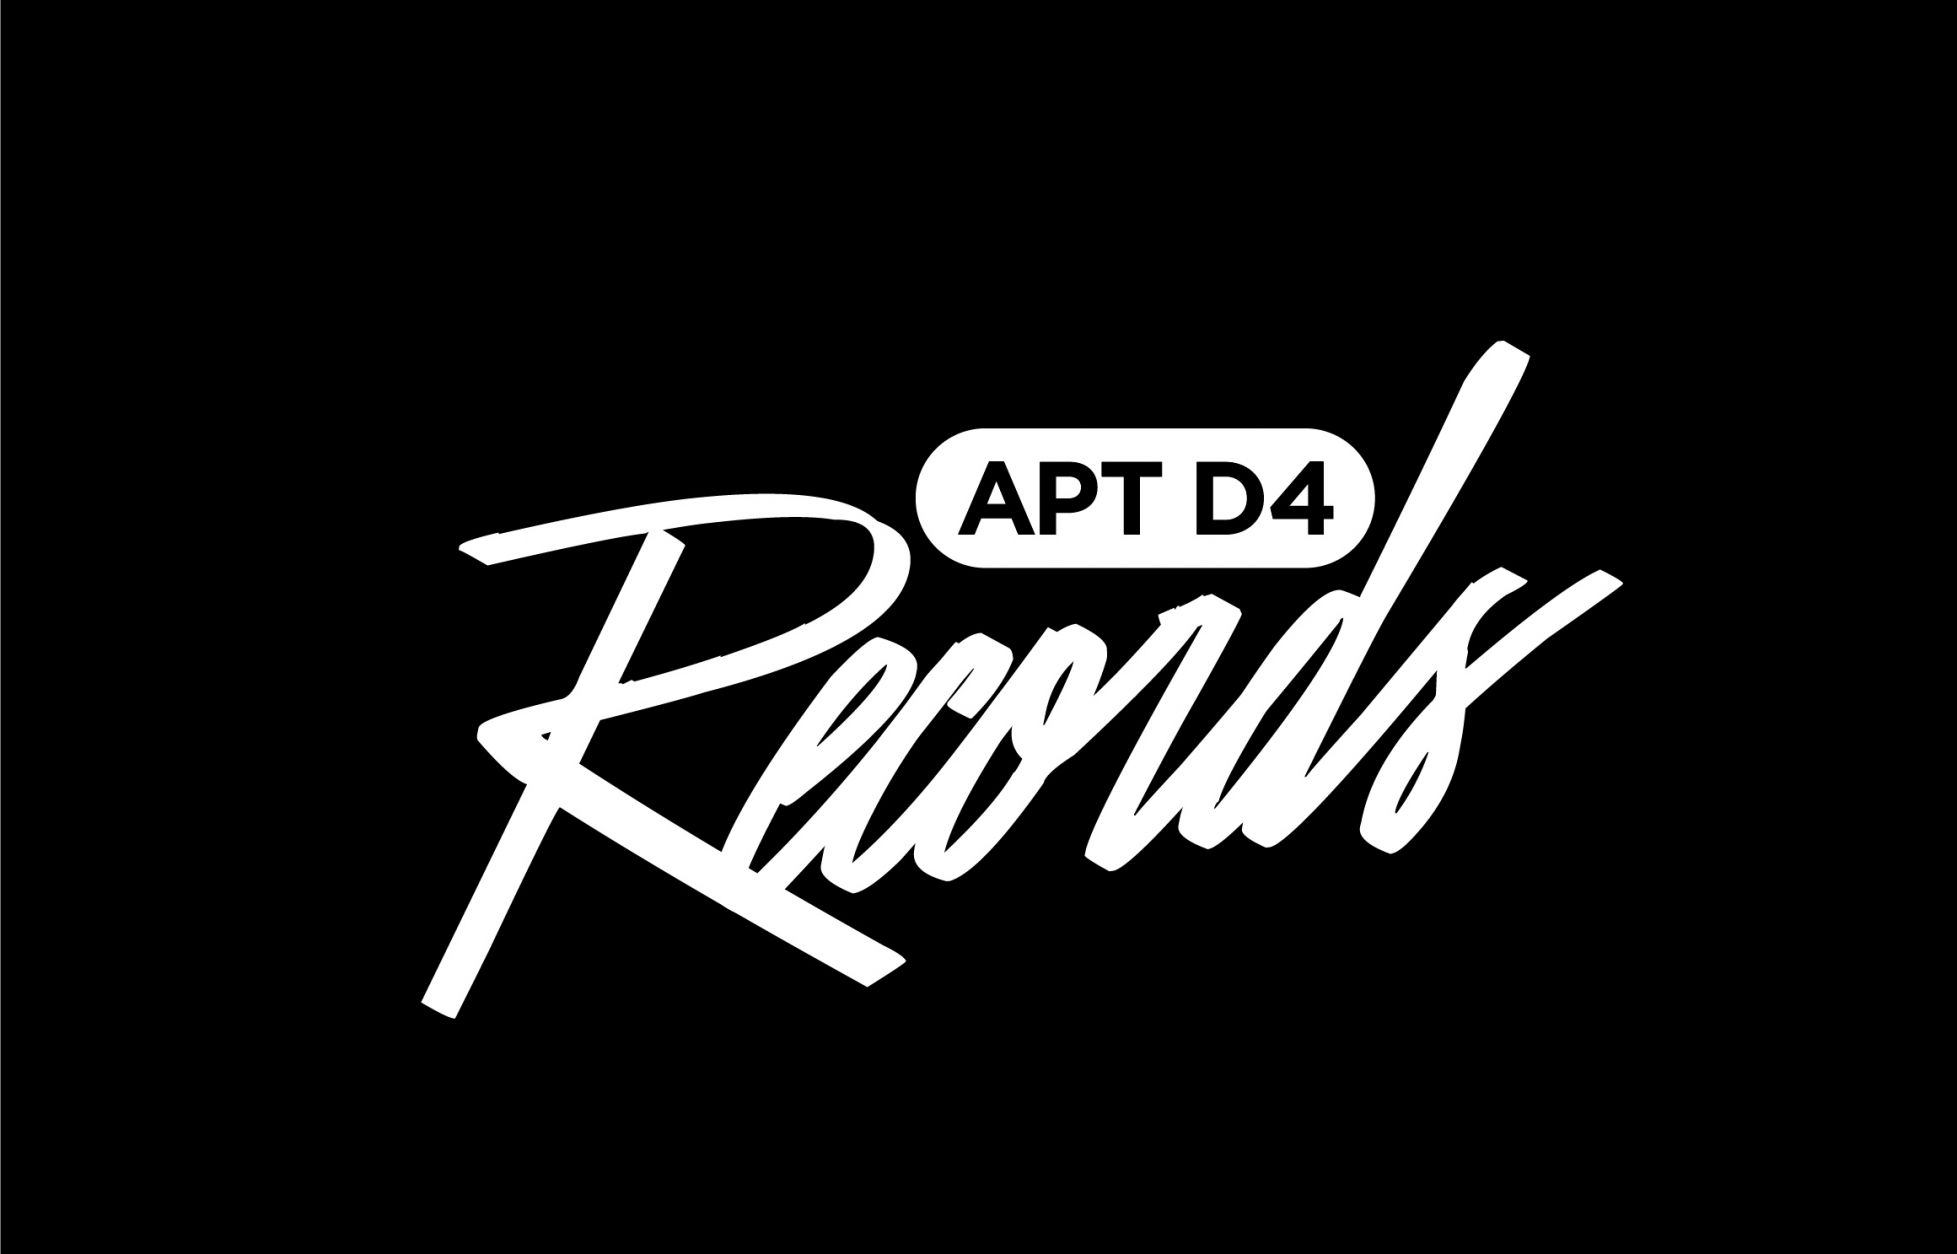 Apt D4 RECORDS Logo